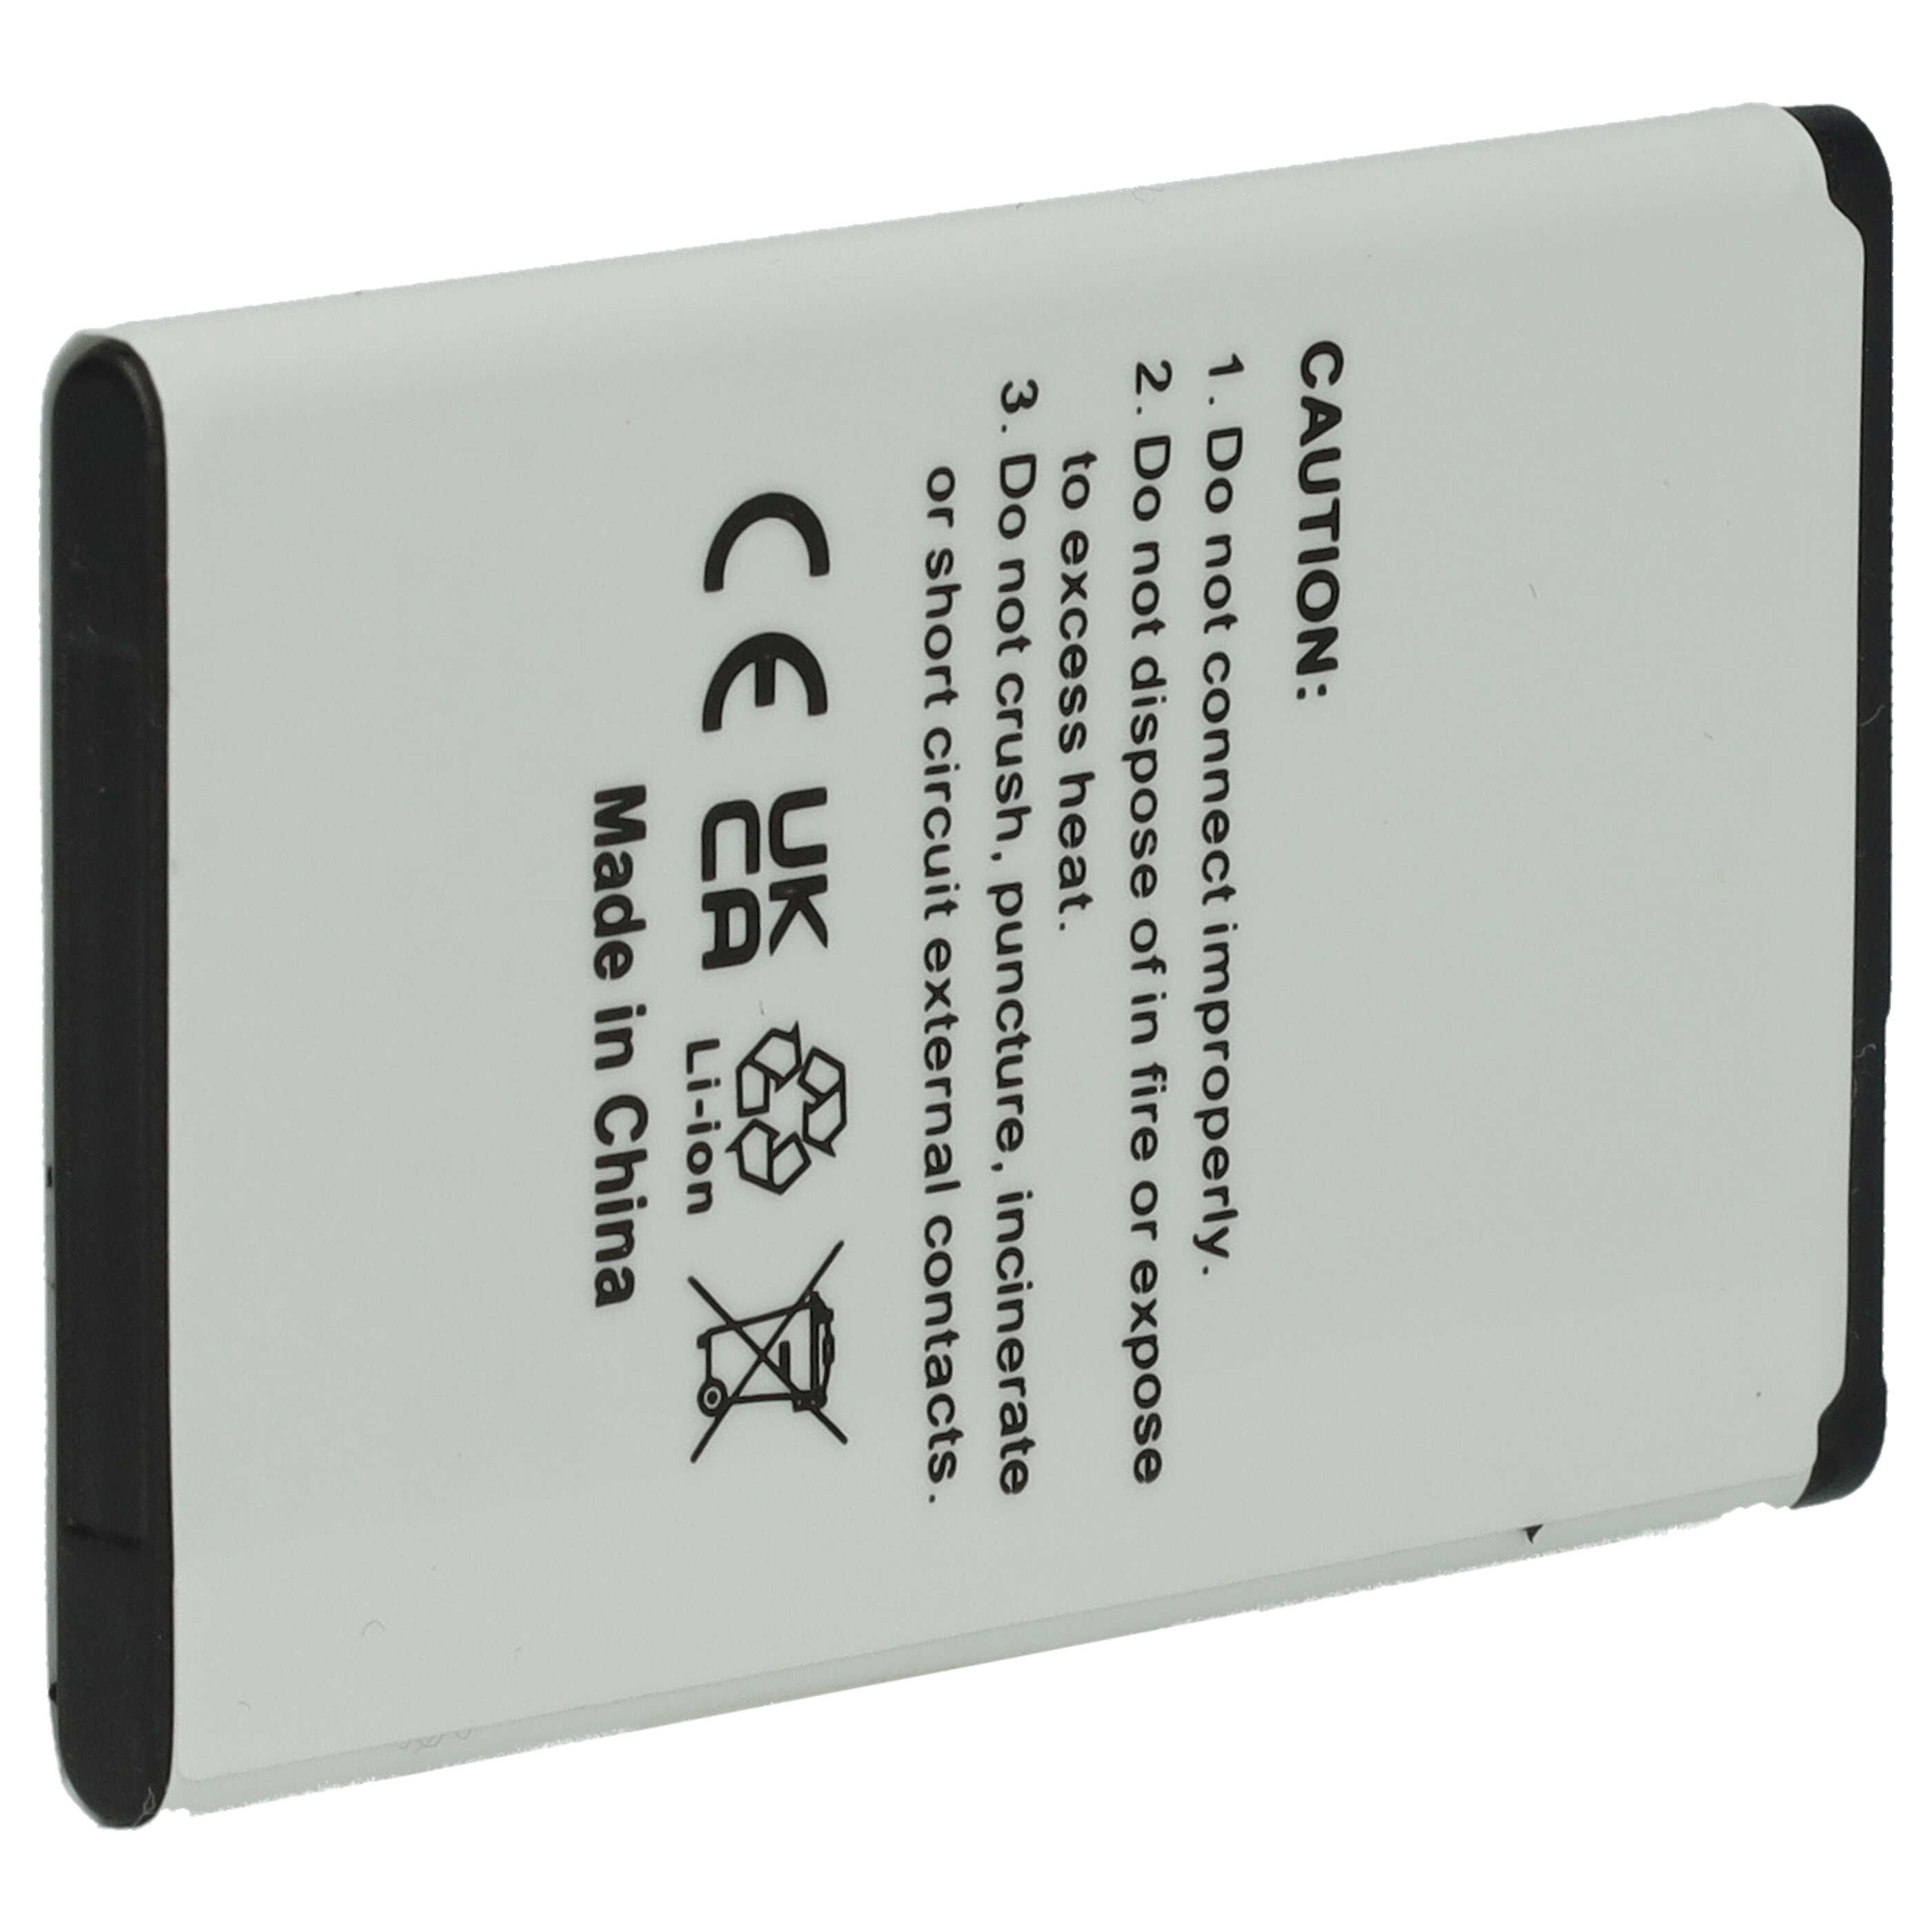 Mobile Phone Battery Replacement for Emporia AK-C140 - 900mAh 3.7V Li-Ion